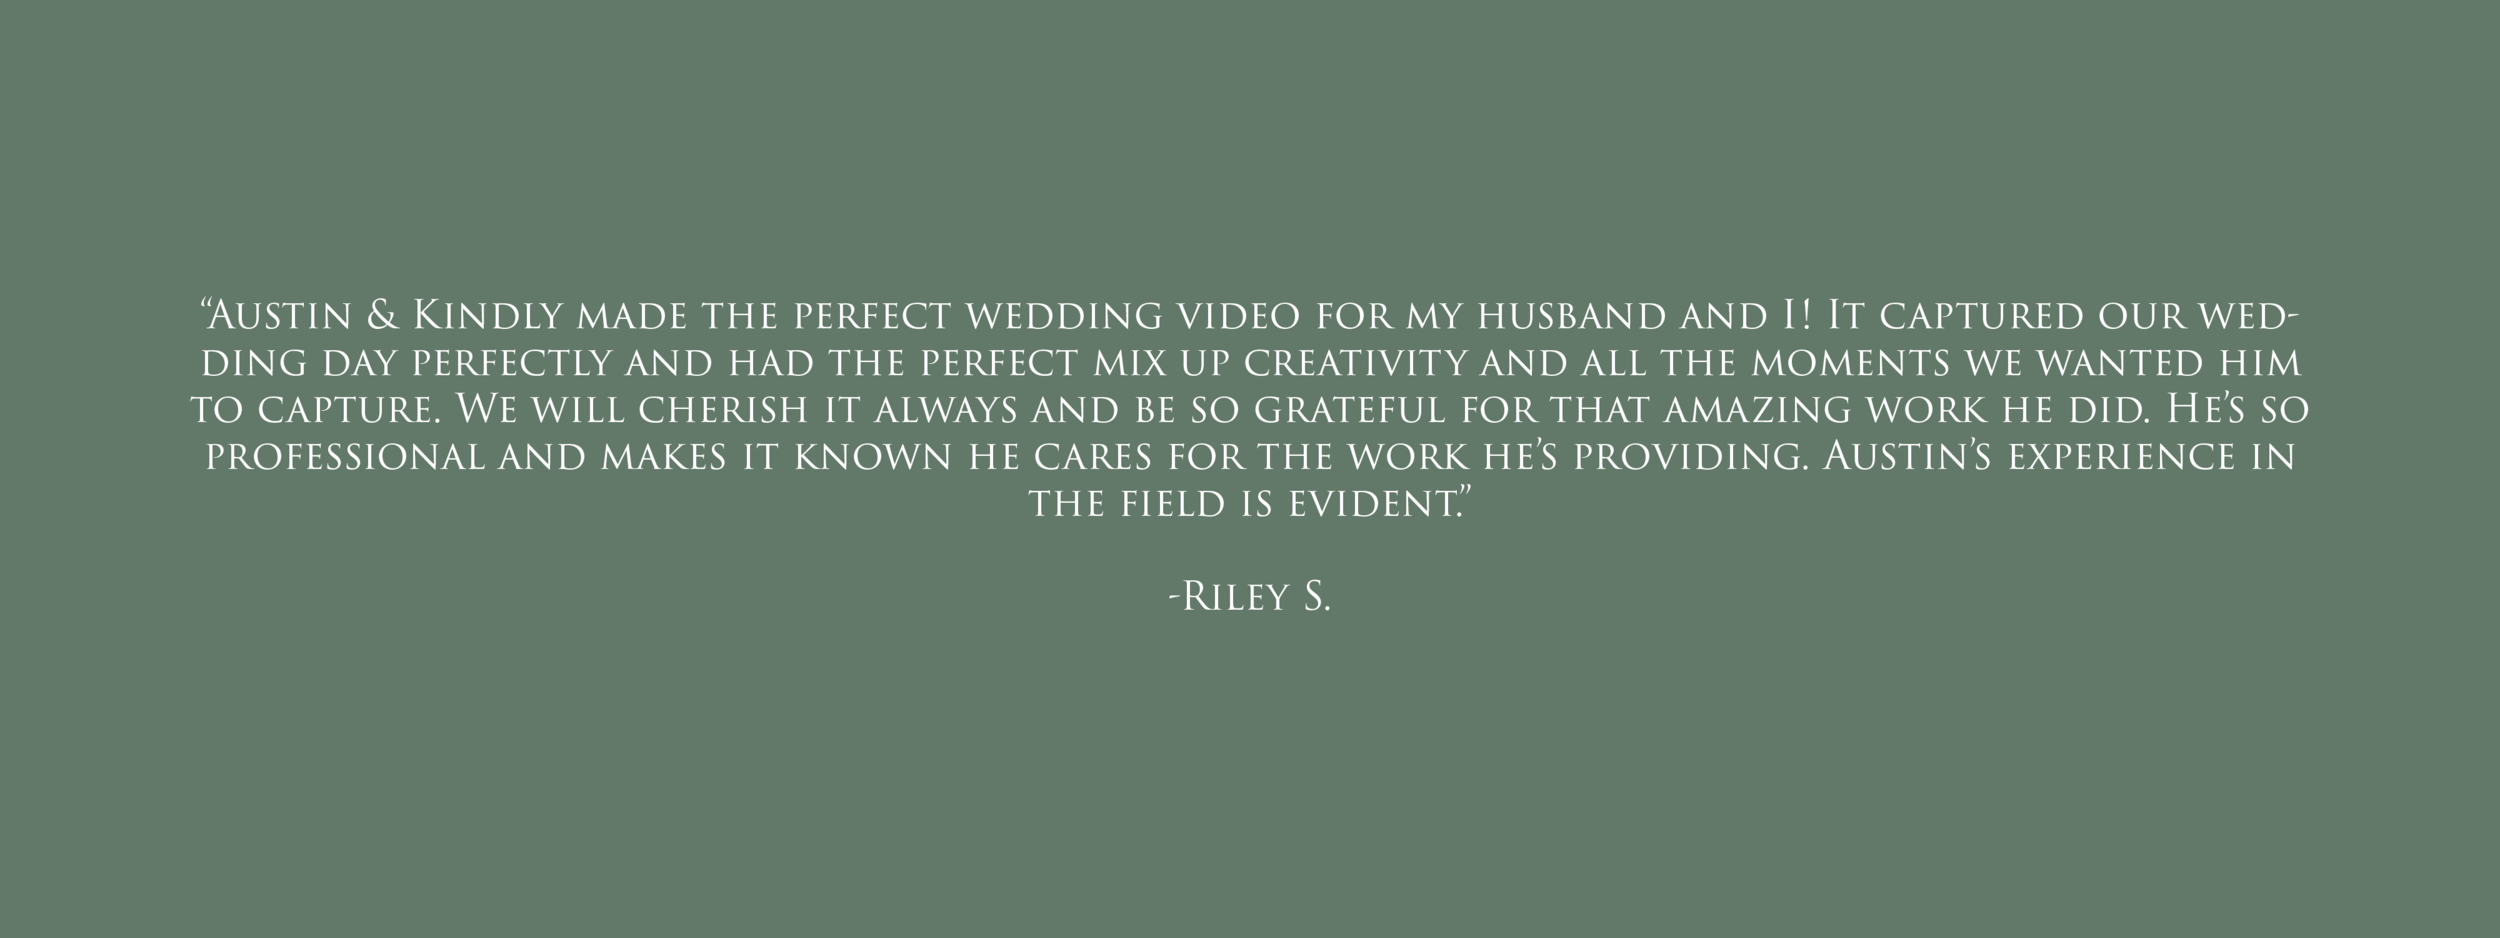 riley s kind words-01.png